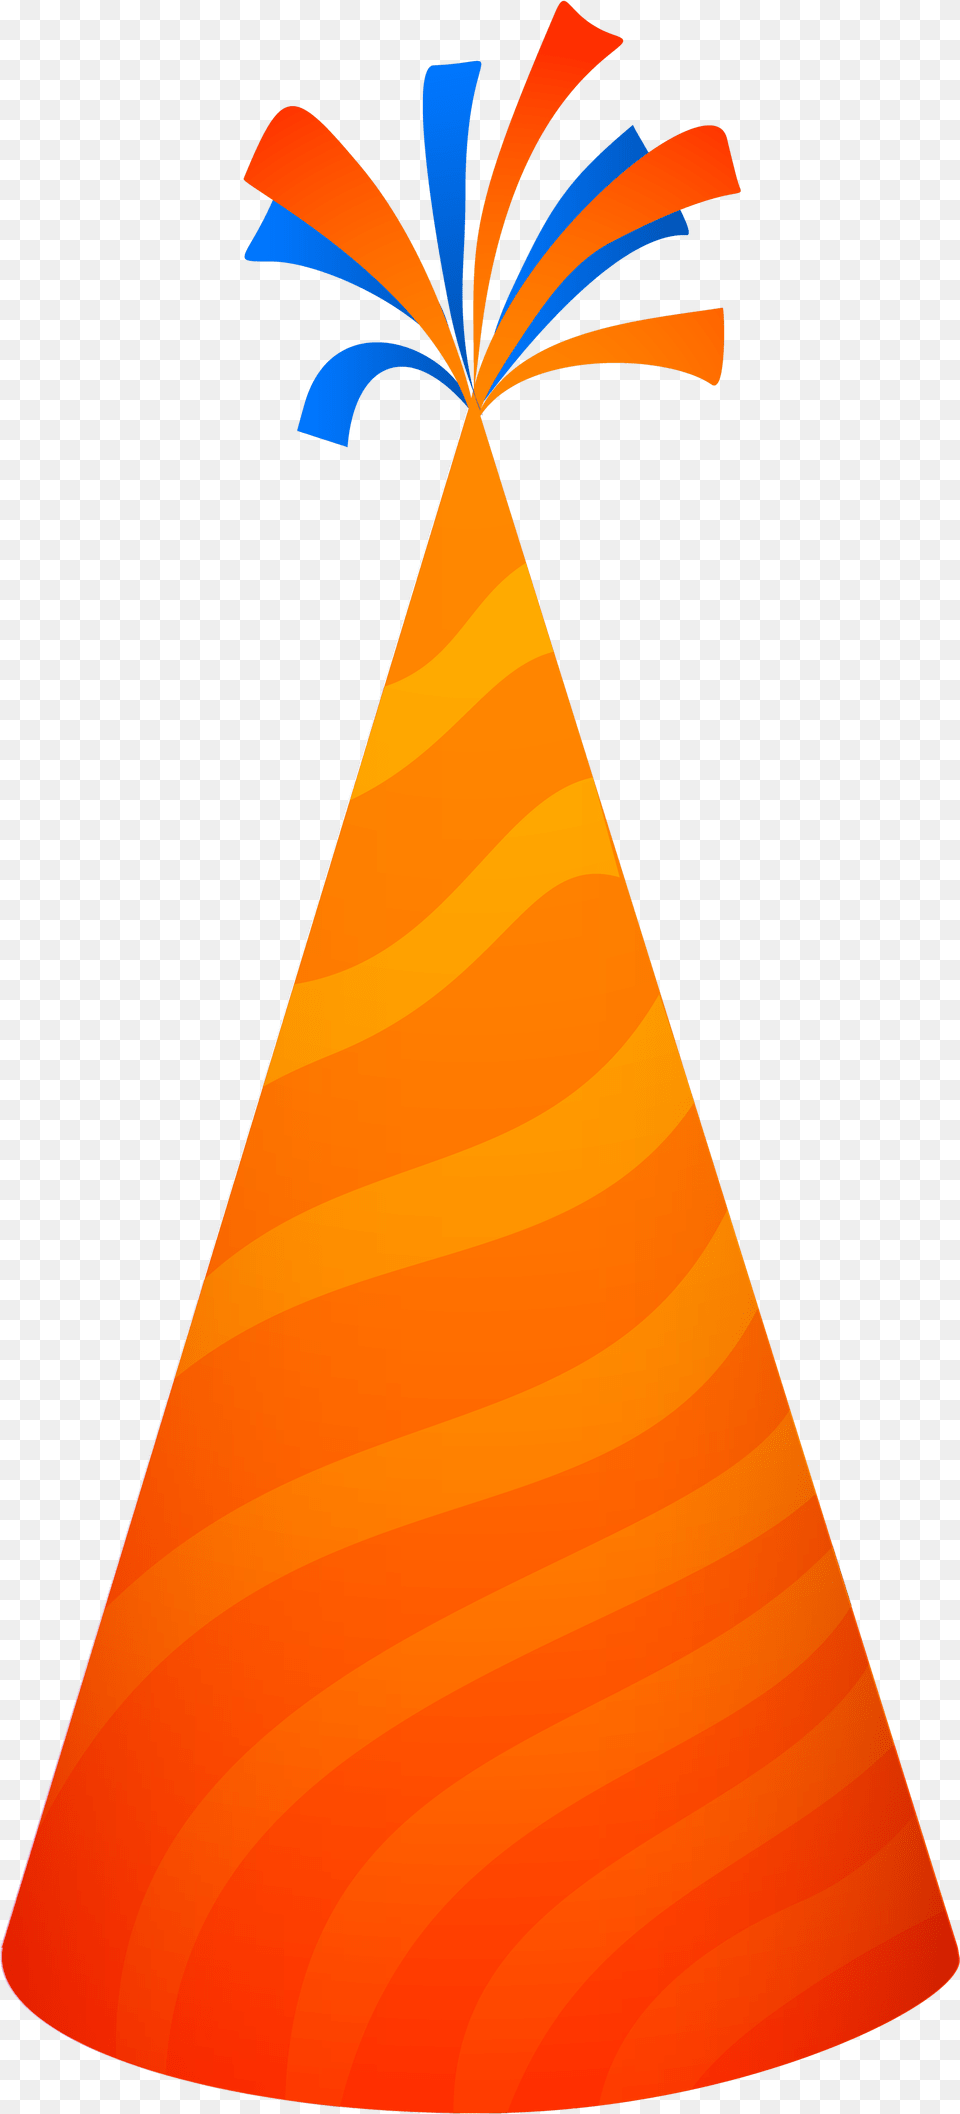 Party Hat Pngpix Party Hat Orange, Clothing, Party Hat Png Image